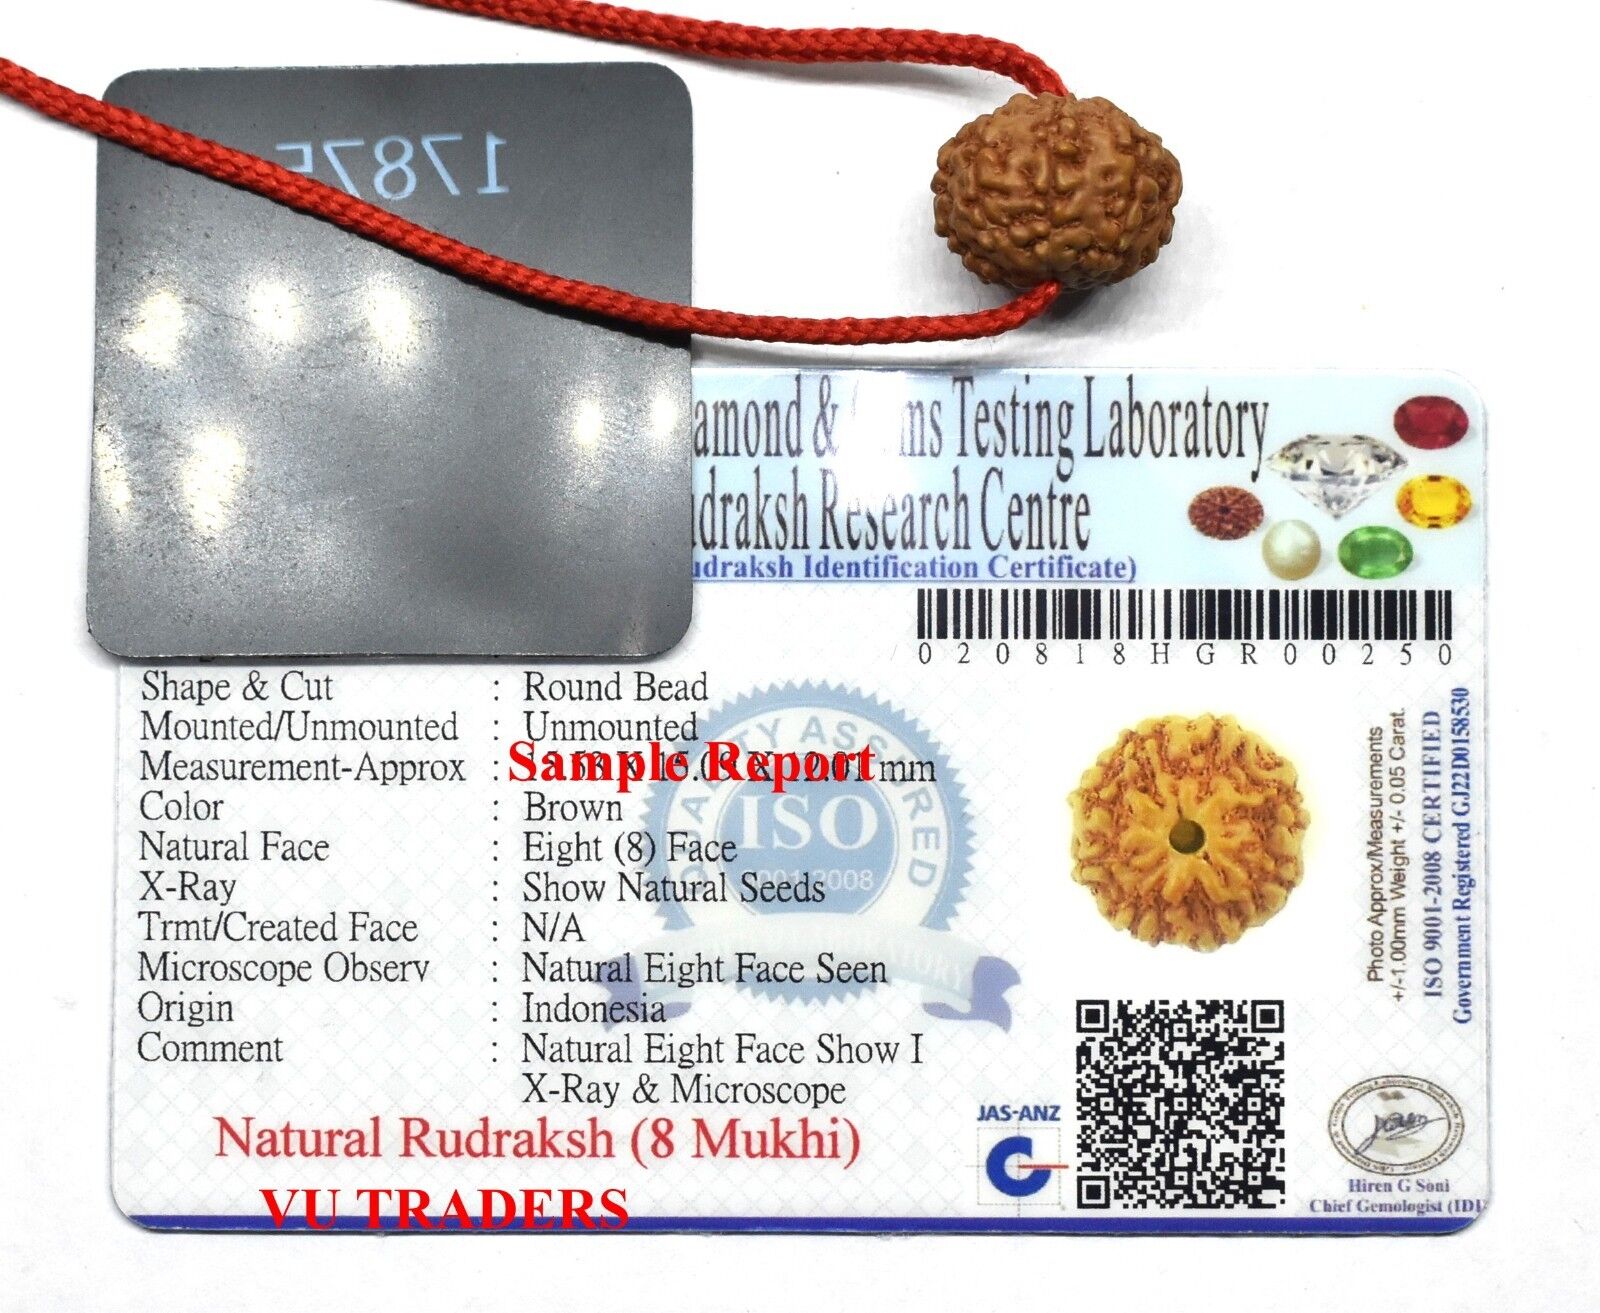 8 Mukhi rudraksha / Eight Face Rudraksh Java Bead Lab Certified Size 14-16 MM